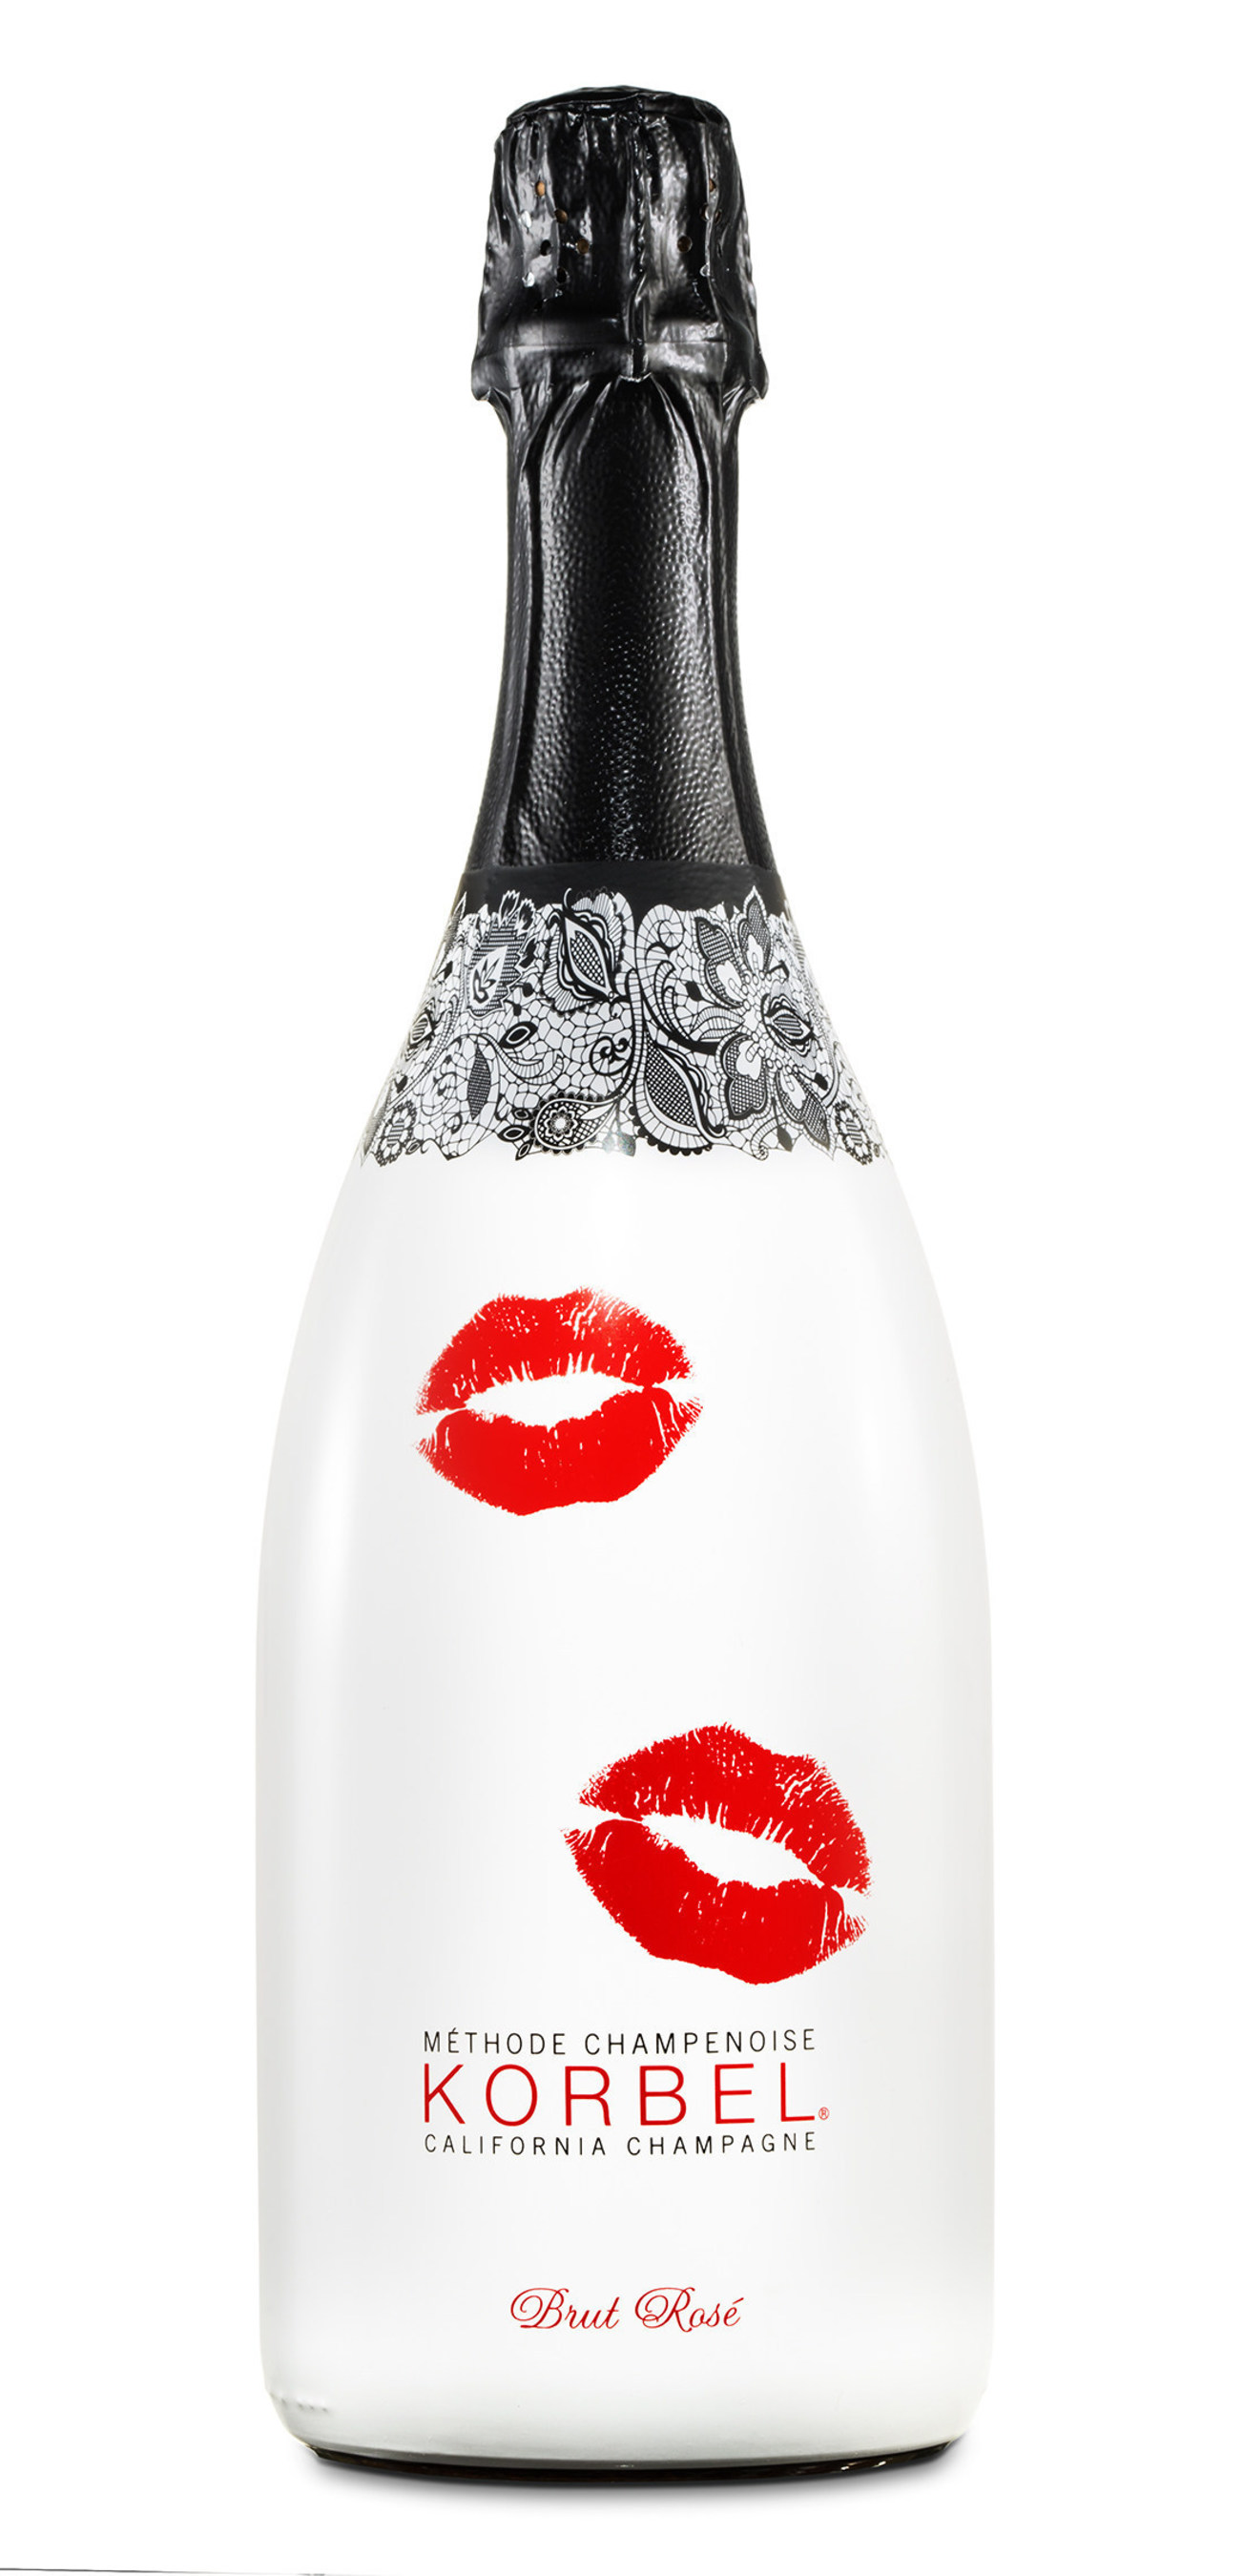 Korbel celebrates romance with a limited edition Brut Rose bottle.